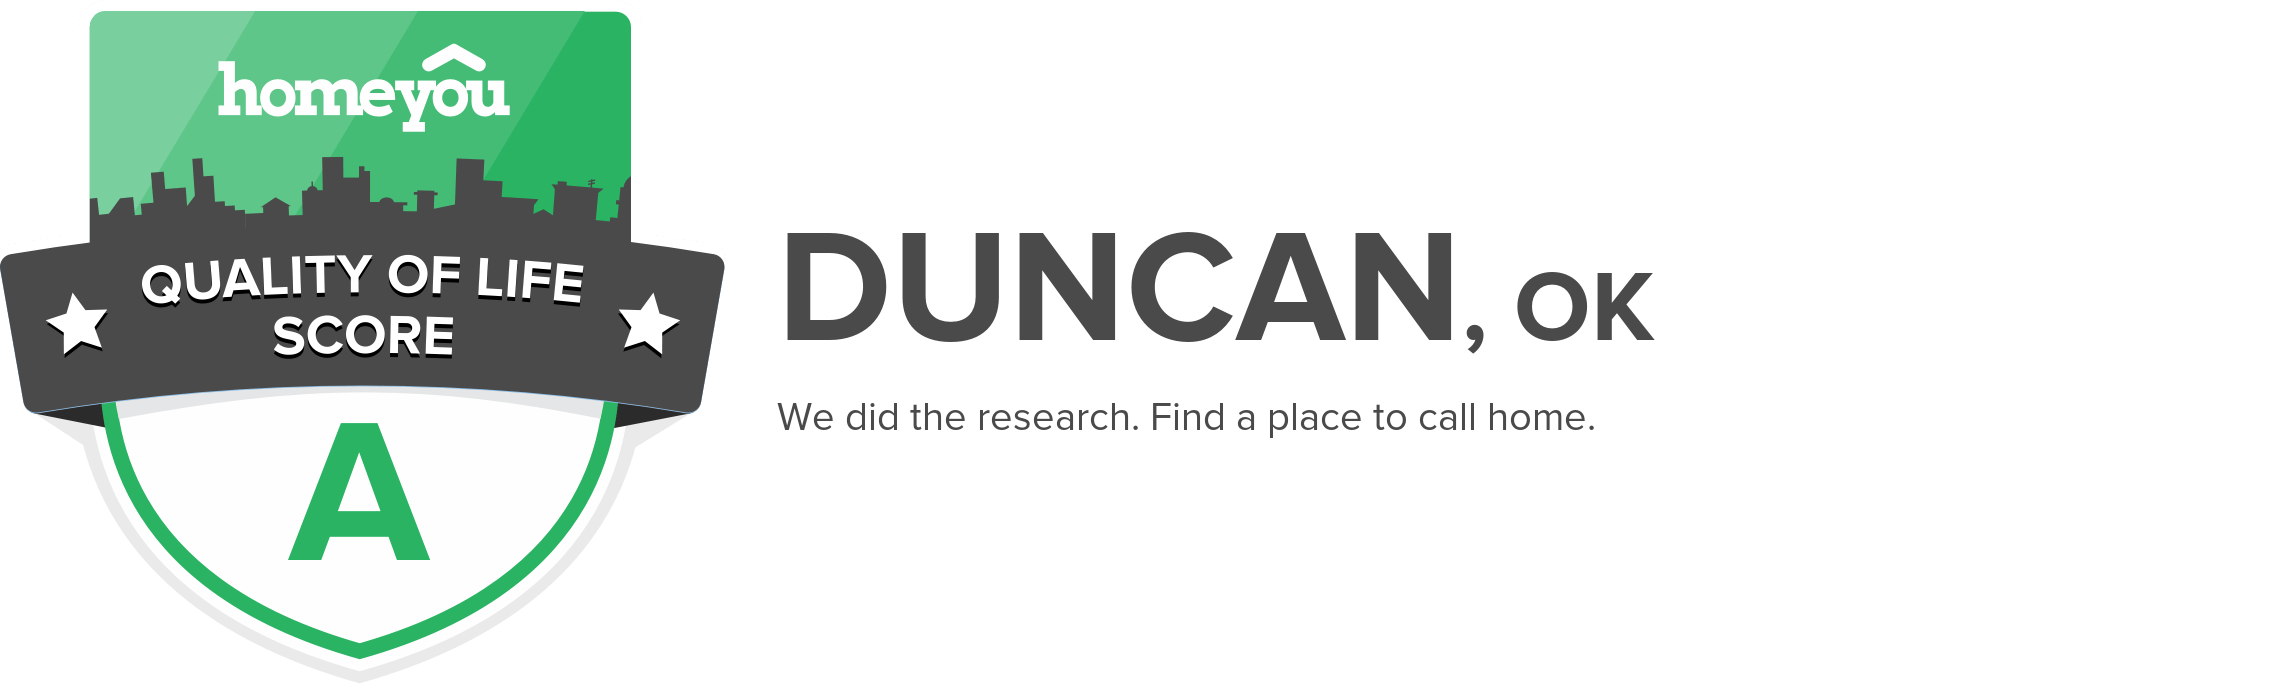 Duncan, OK